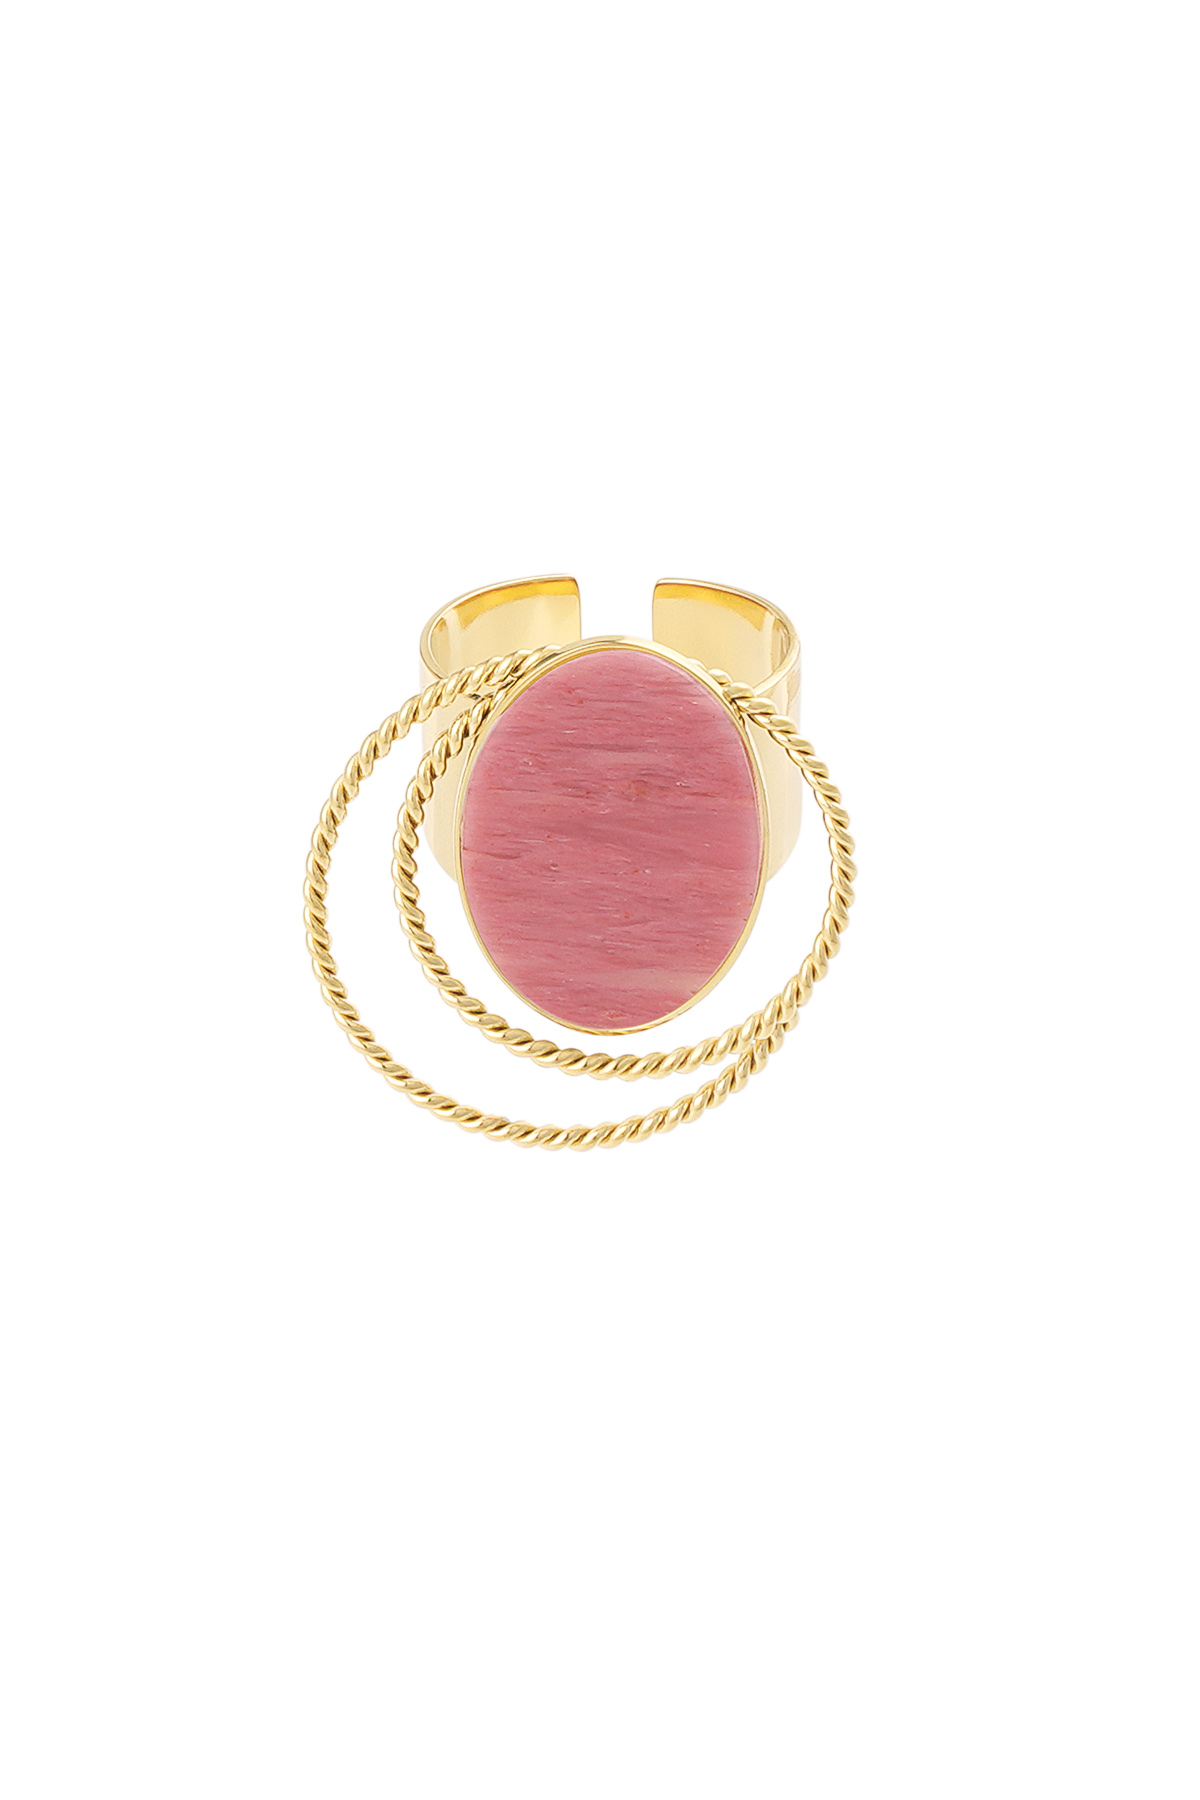 Ring steen met cirkels - goud/roze